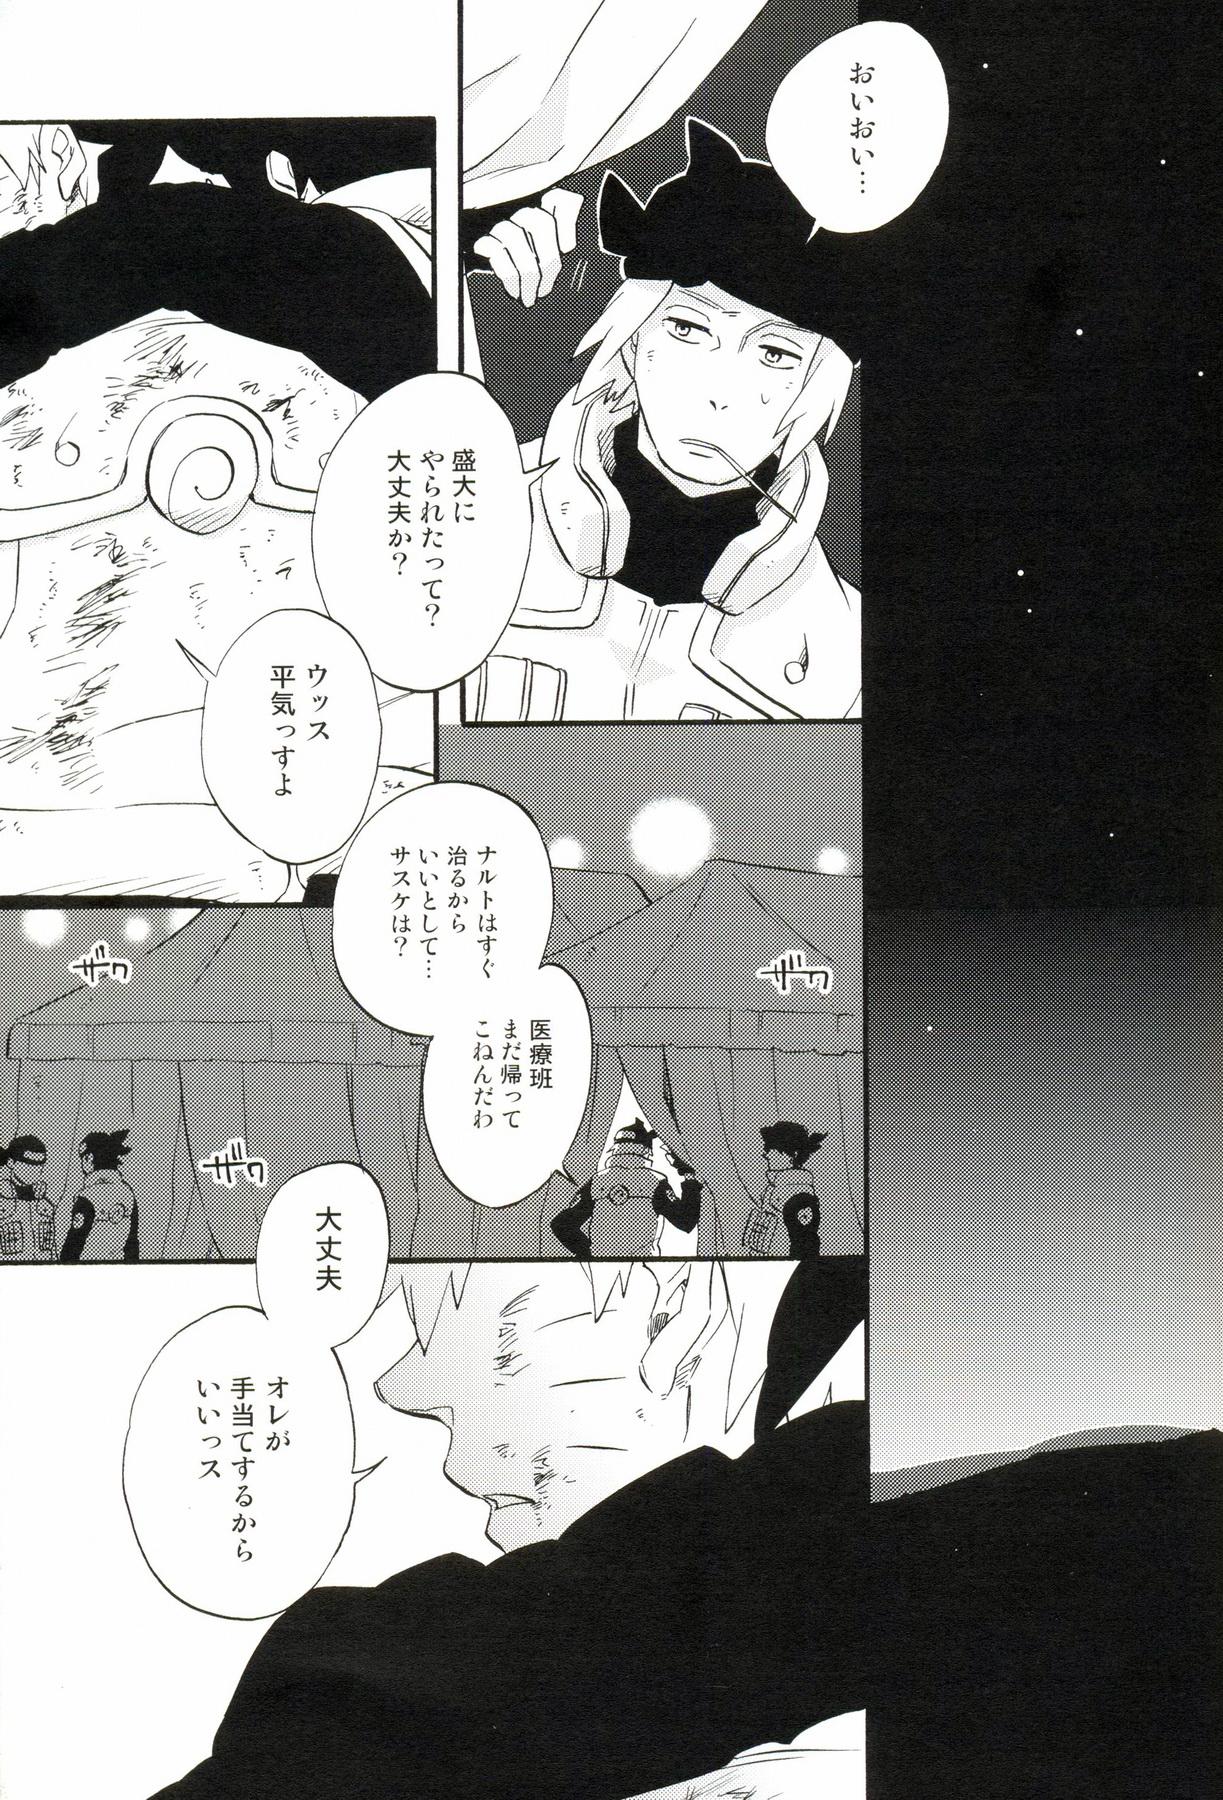 Best Blowjobs Hakumei no kyouki by 10-Rankai - Naruto Love - Page 4